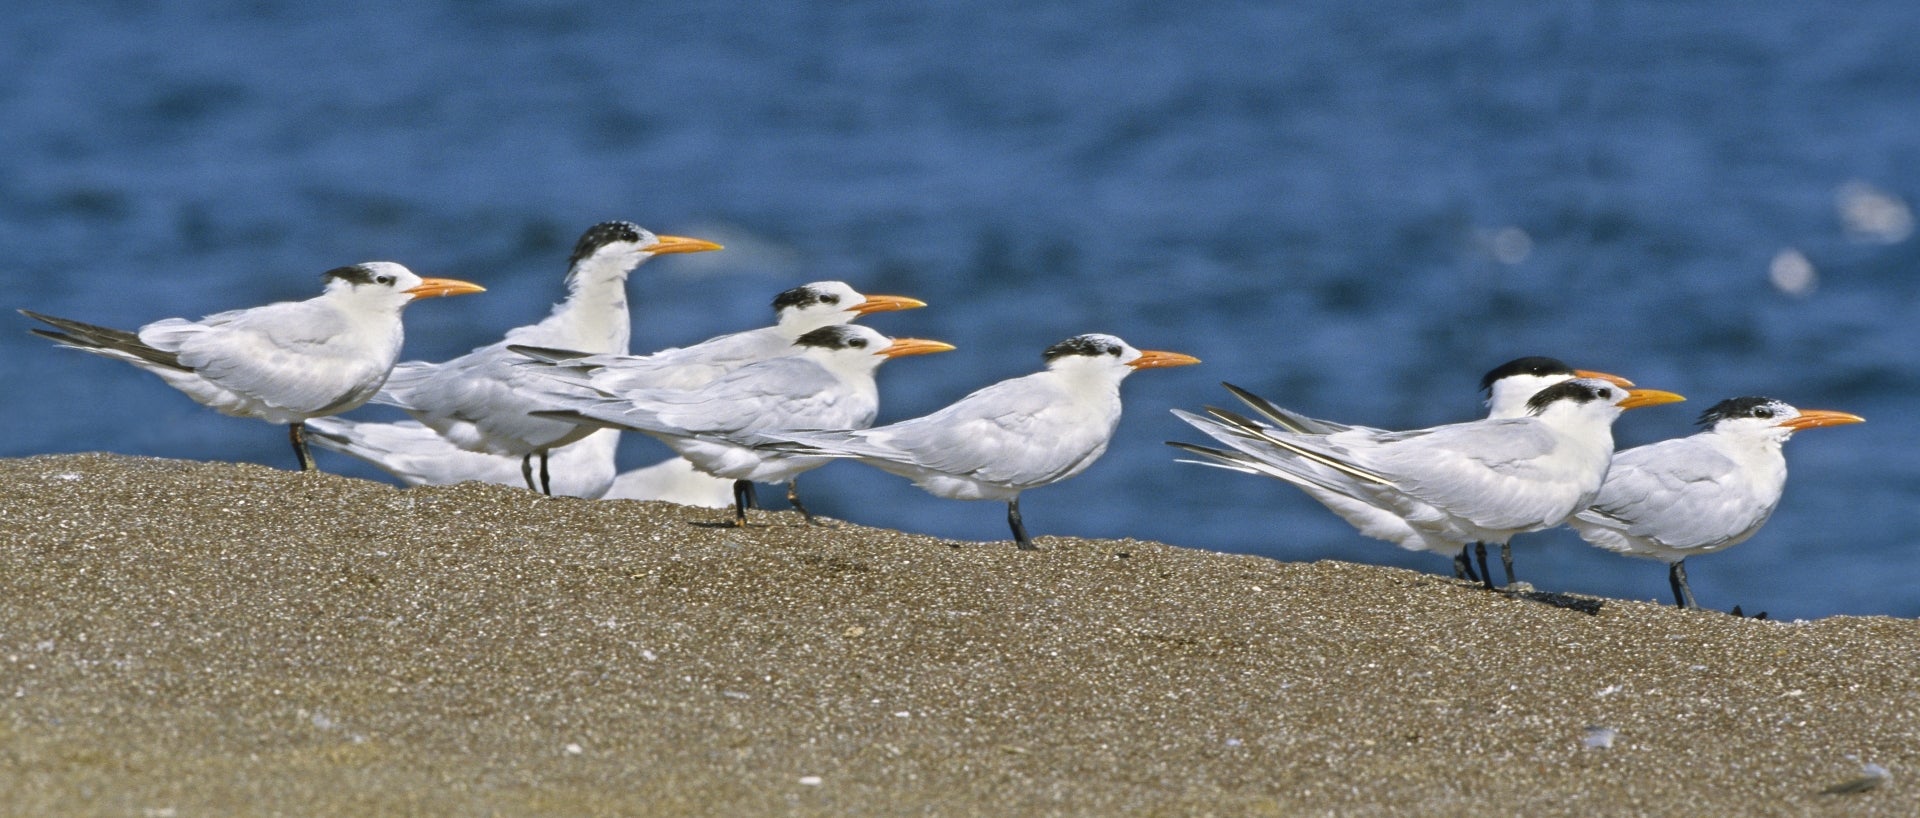 Gathering of adult elegant terns on sand